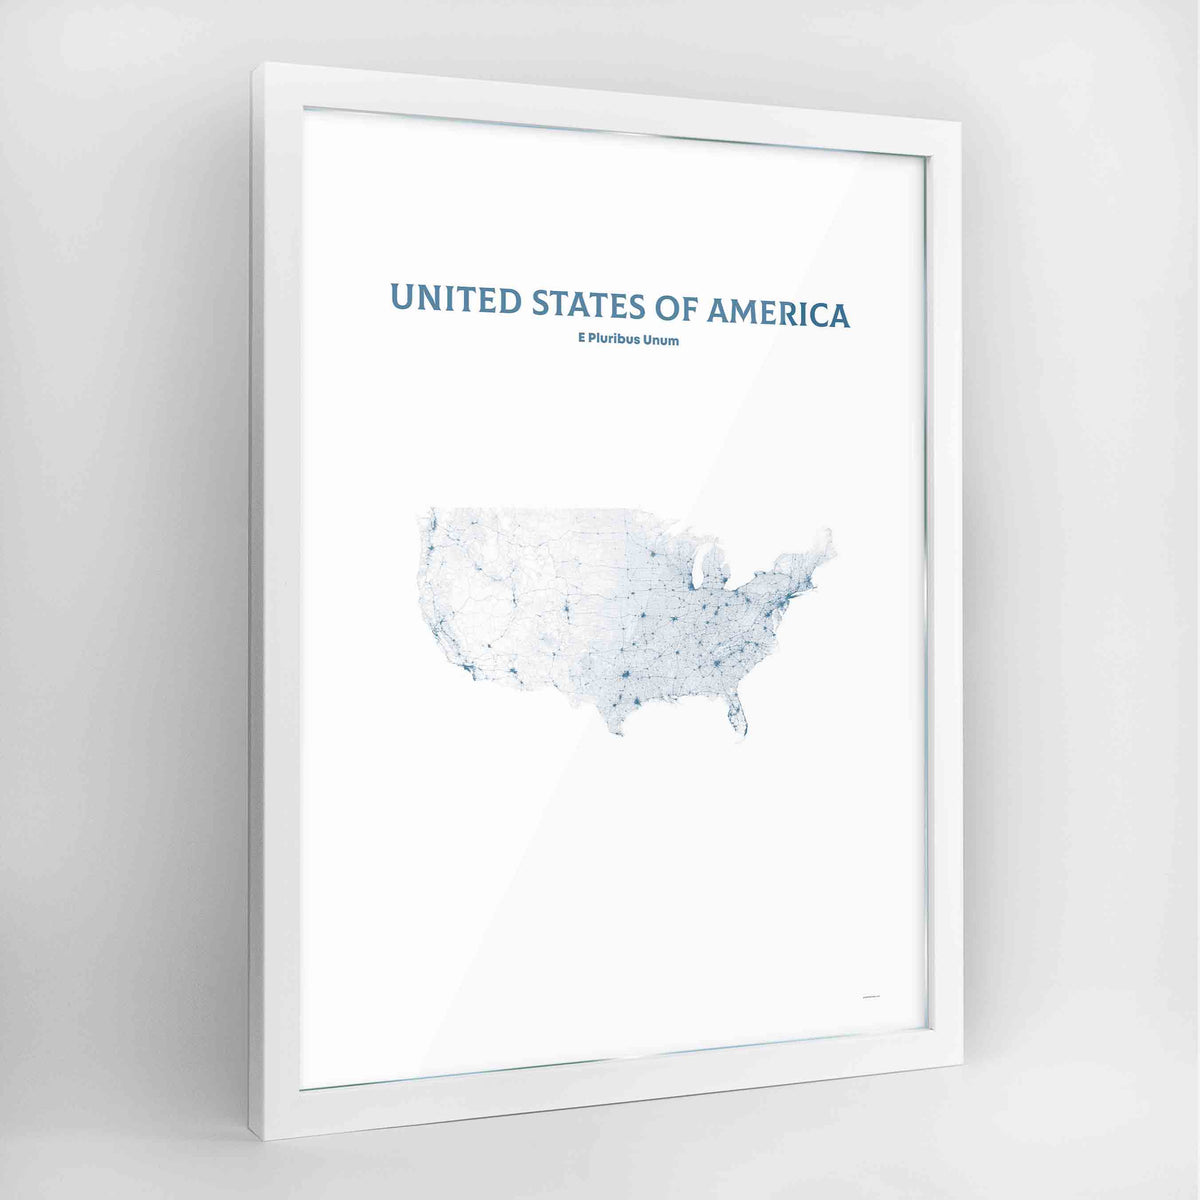 United States of America - All Roads Art Print - Framed